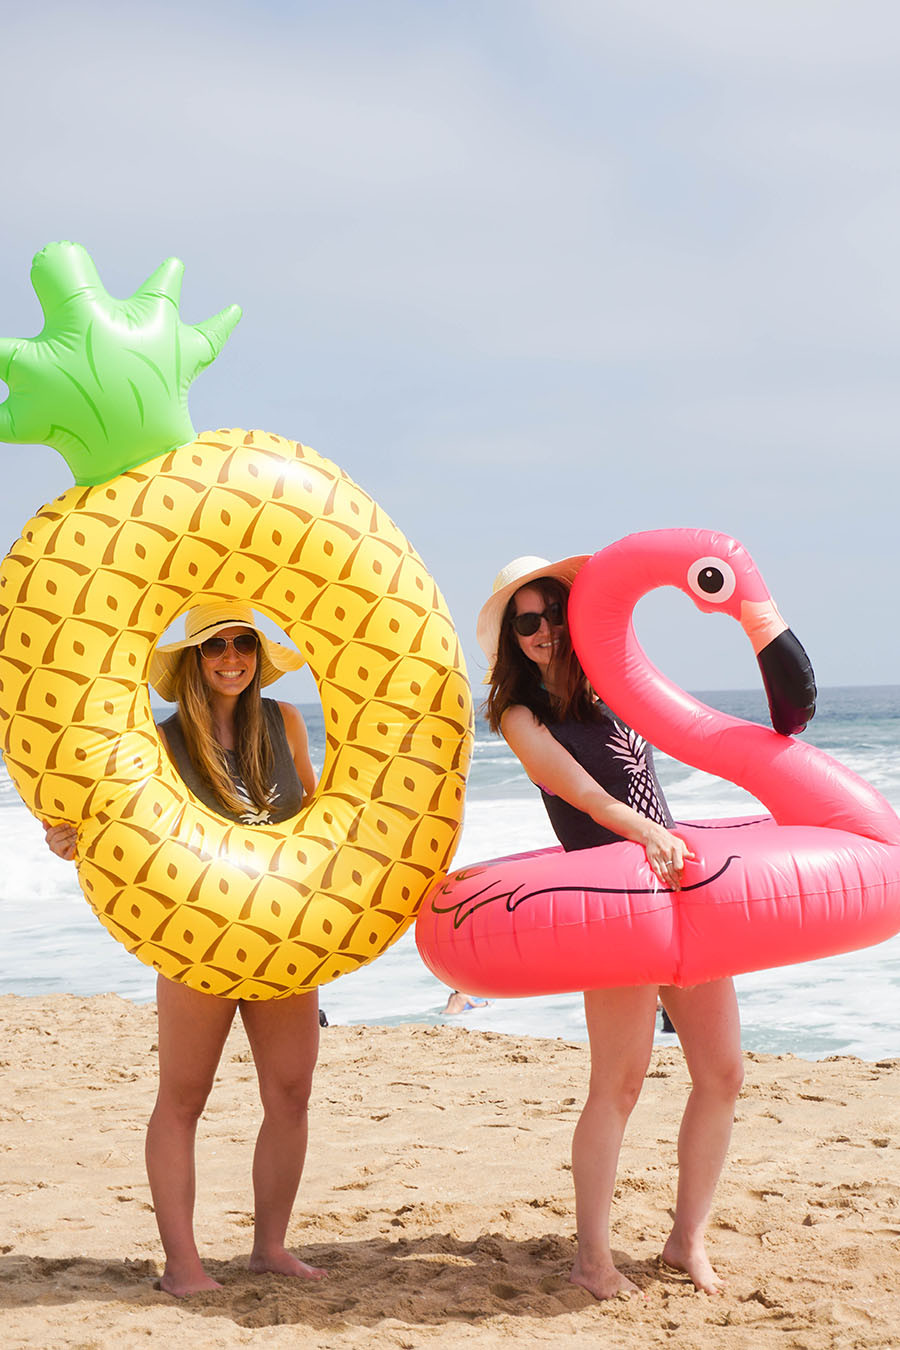 Bachelorette Party Beach Ideas
 A Tropical Beach Bachelorette Party